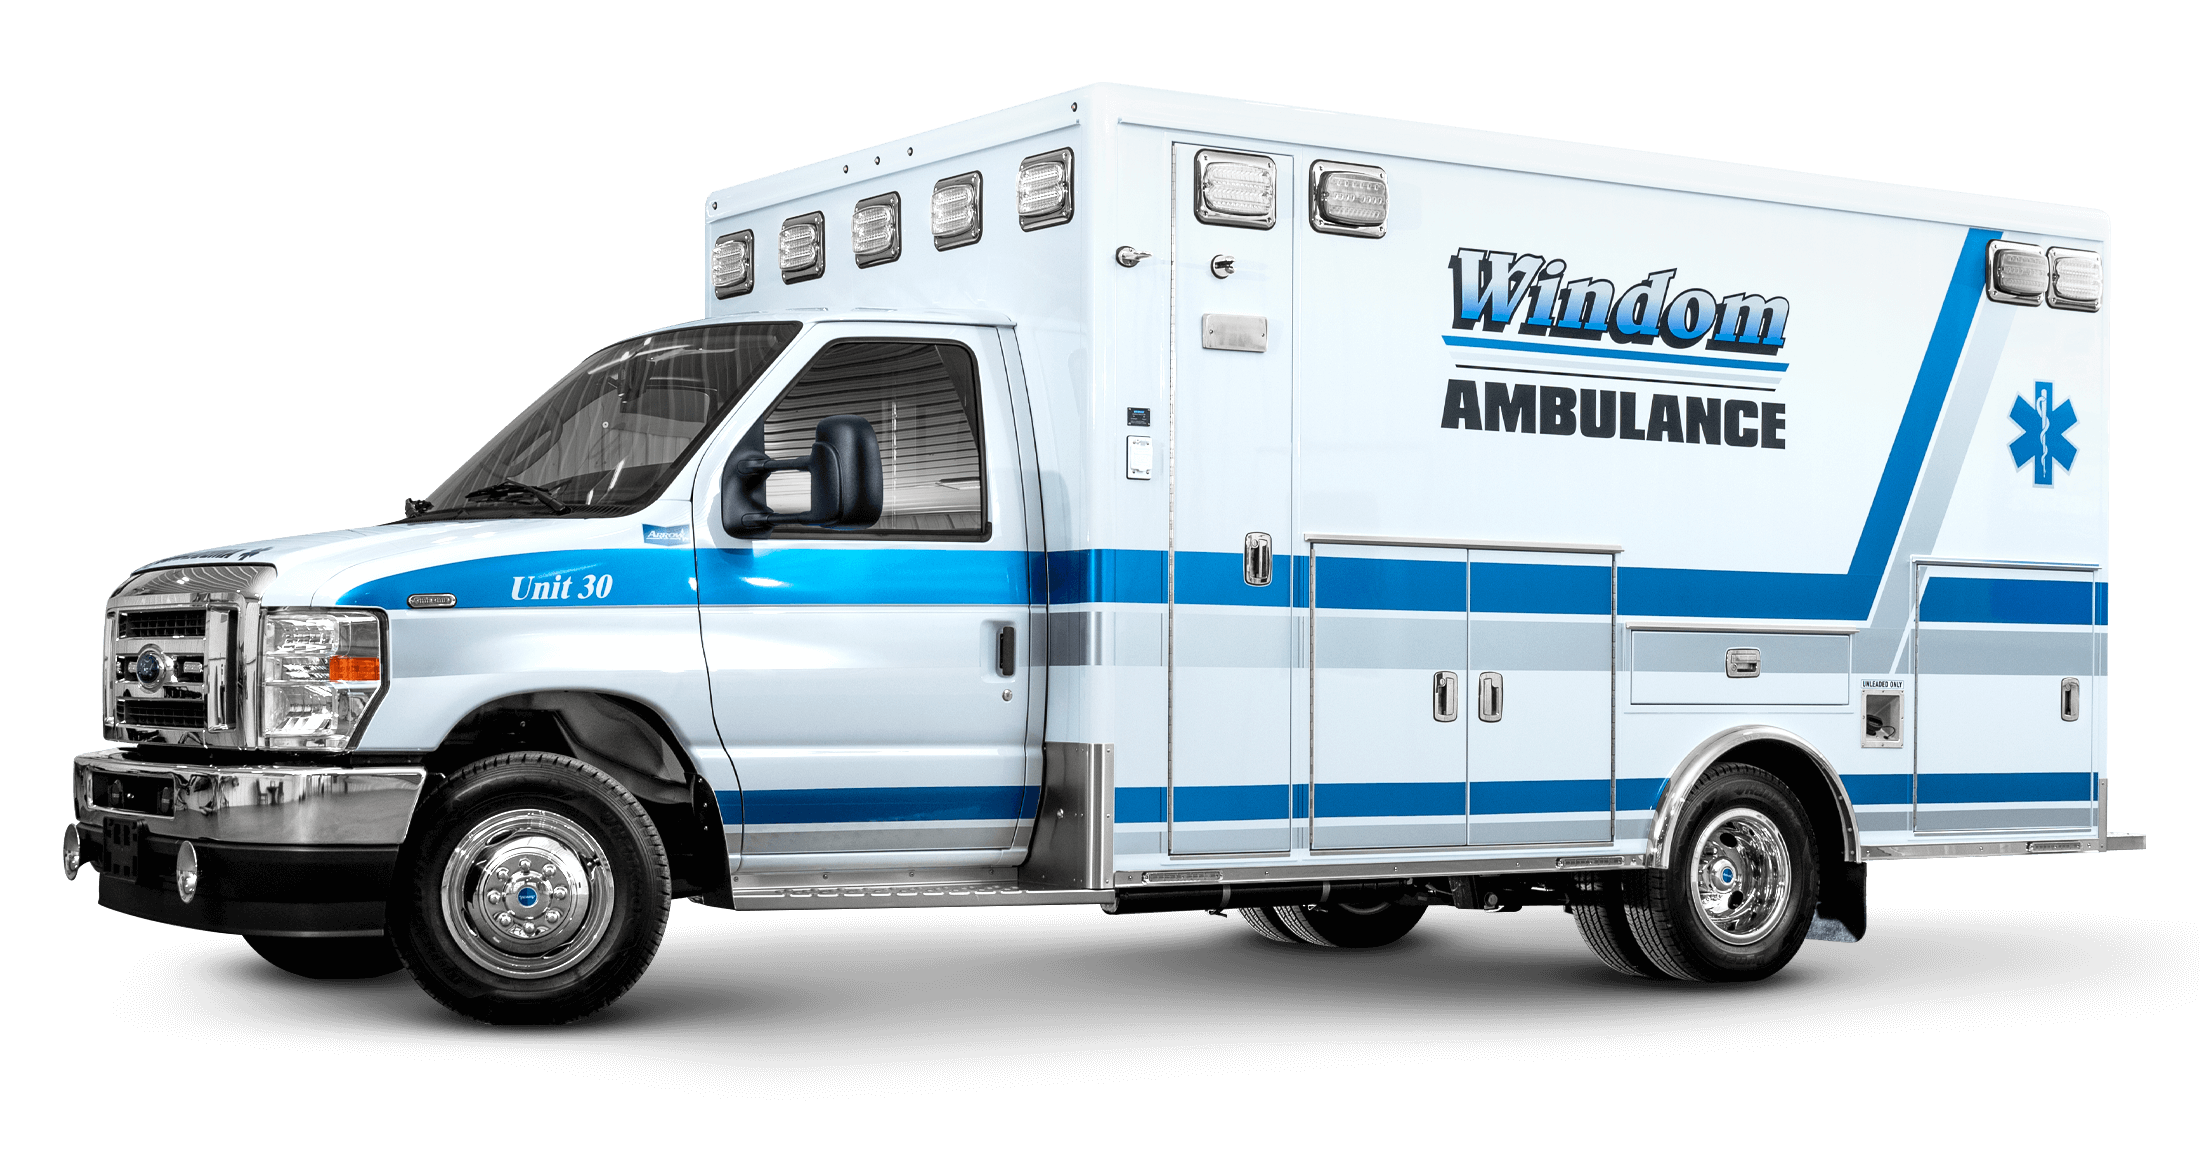 Windom Ambulance Service